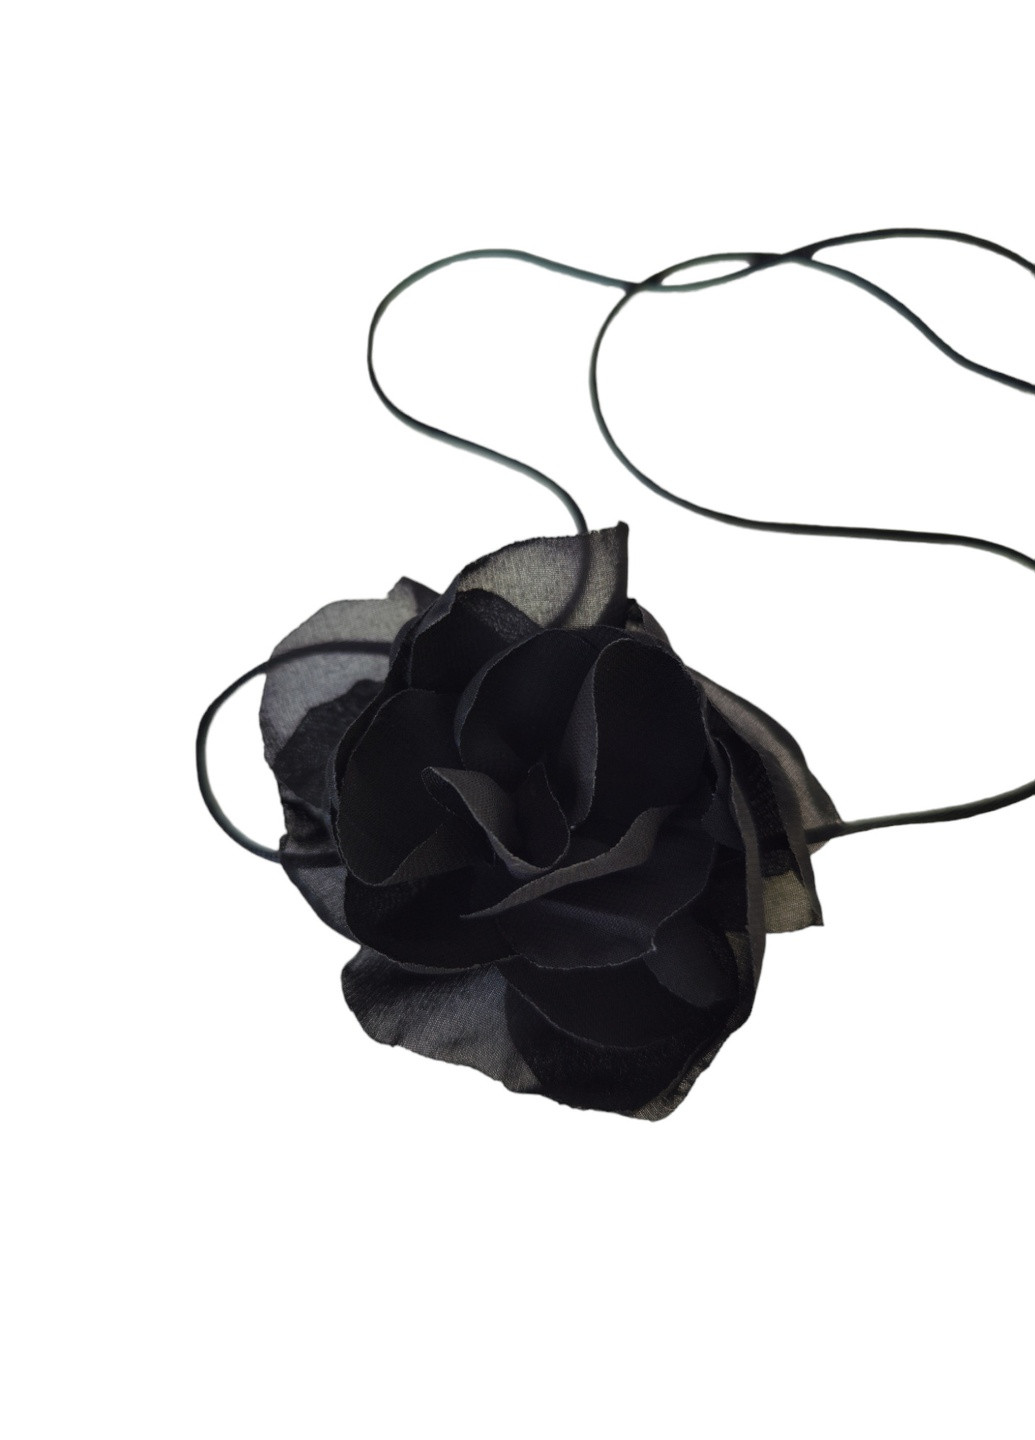 Чокер на шею цветок роза черного цвета на шнурке, украшение на шею шифоновая роза Ksenija Vitali (259318160)